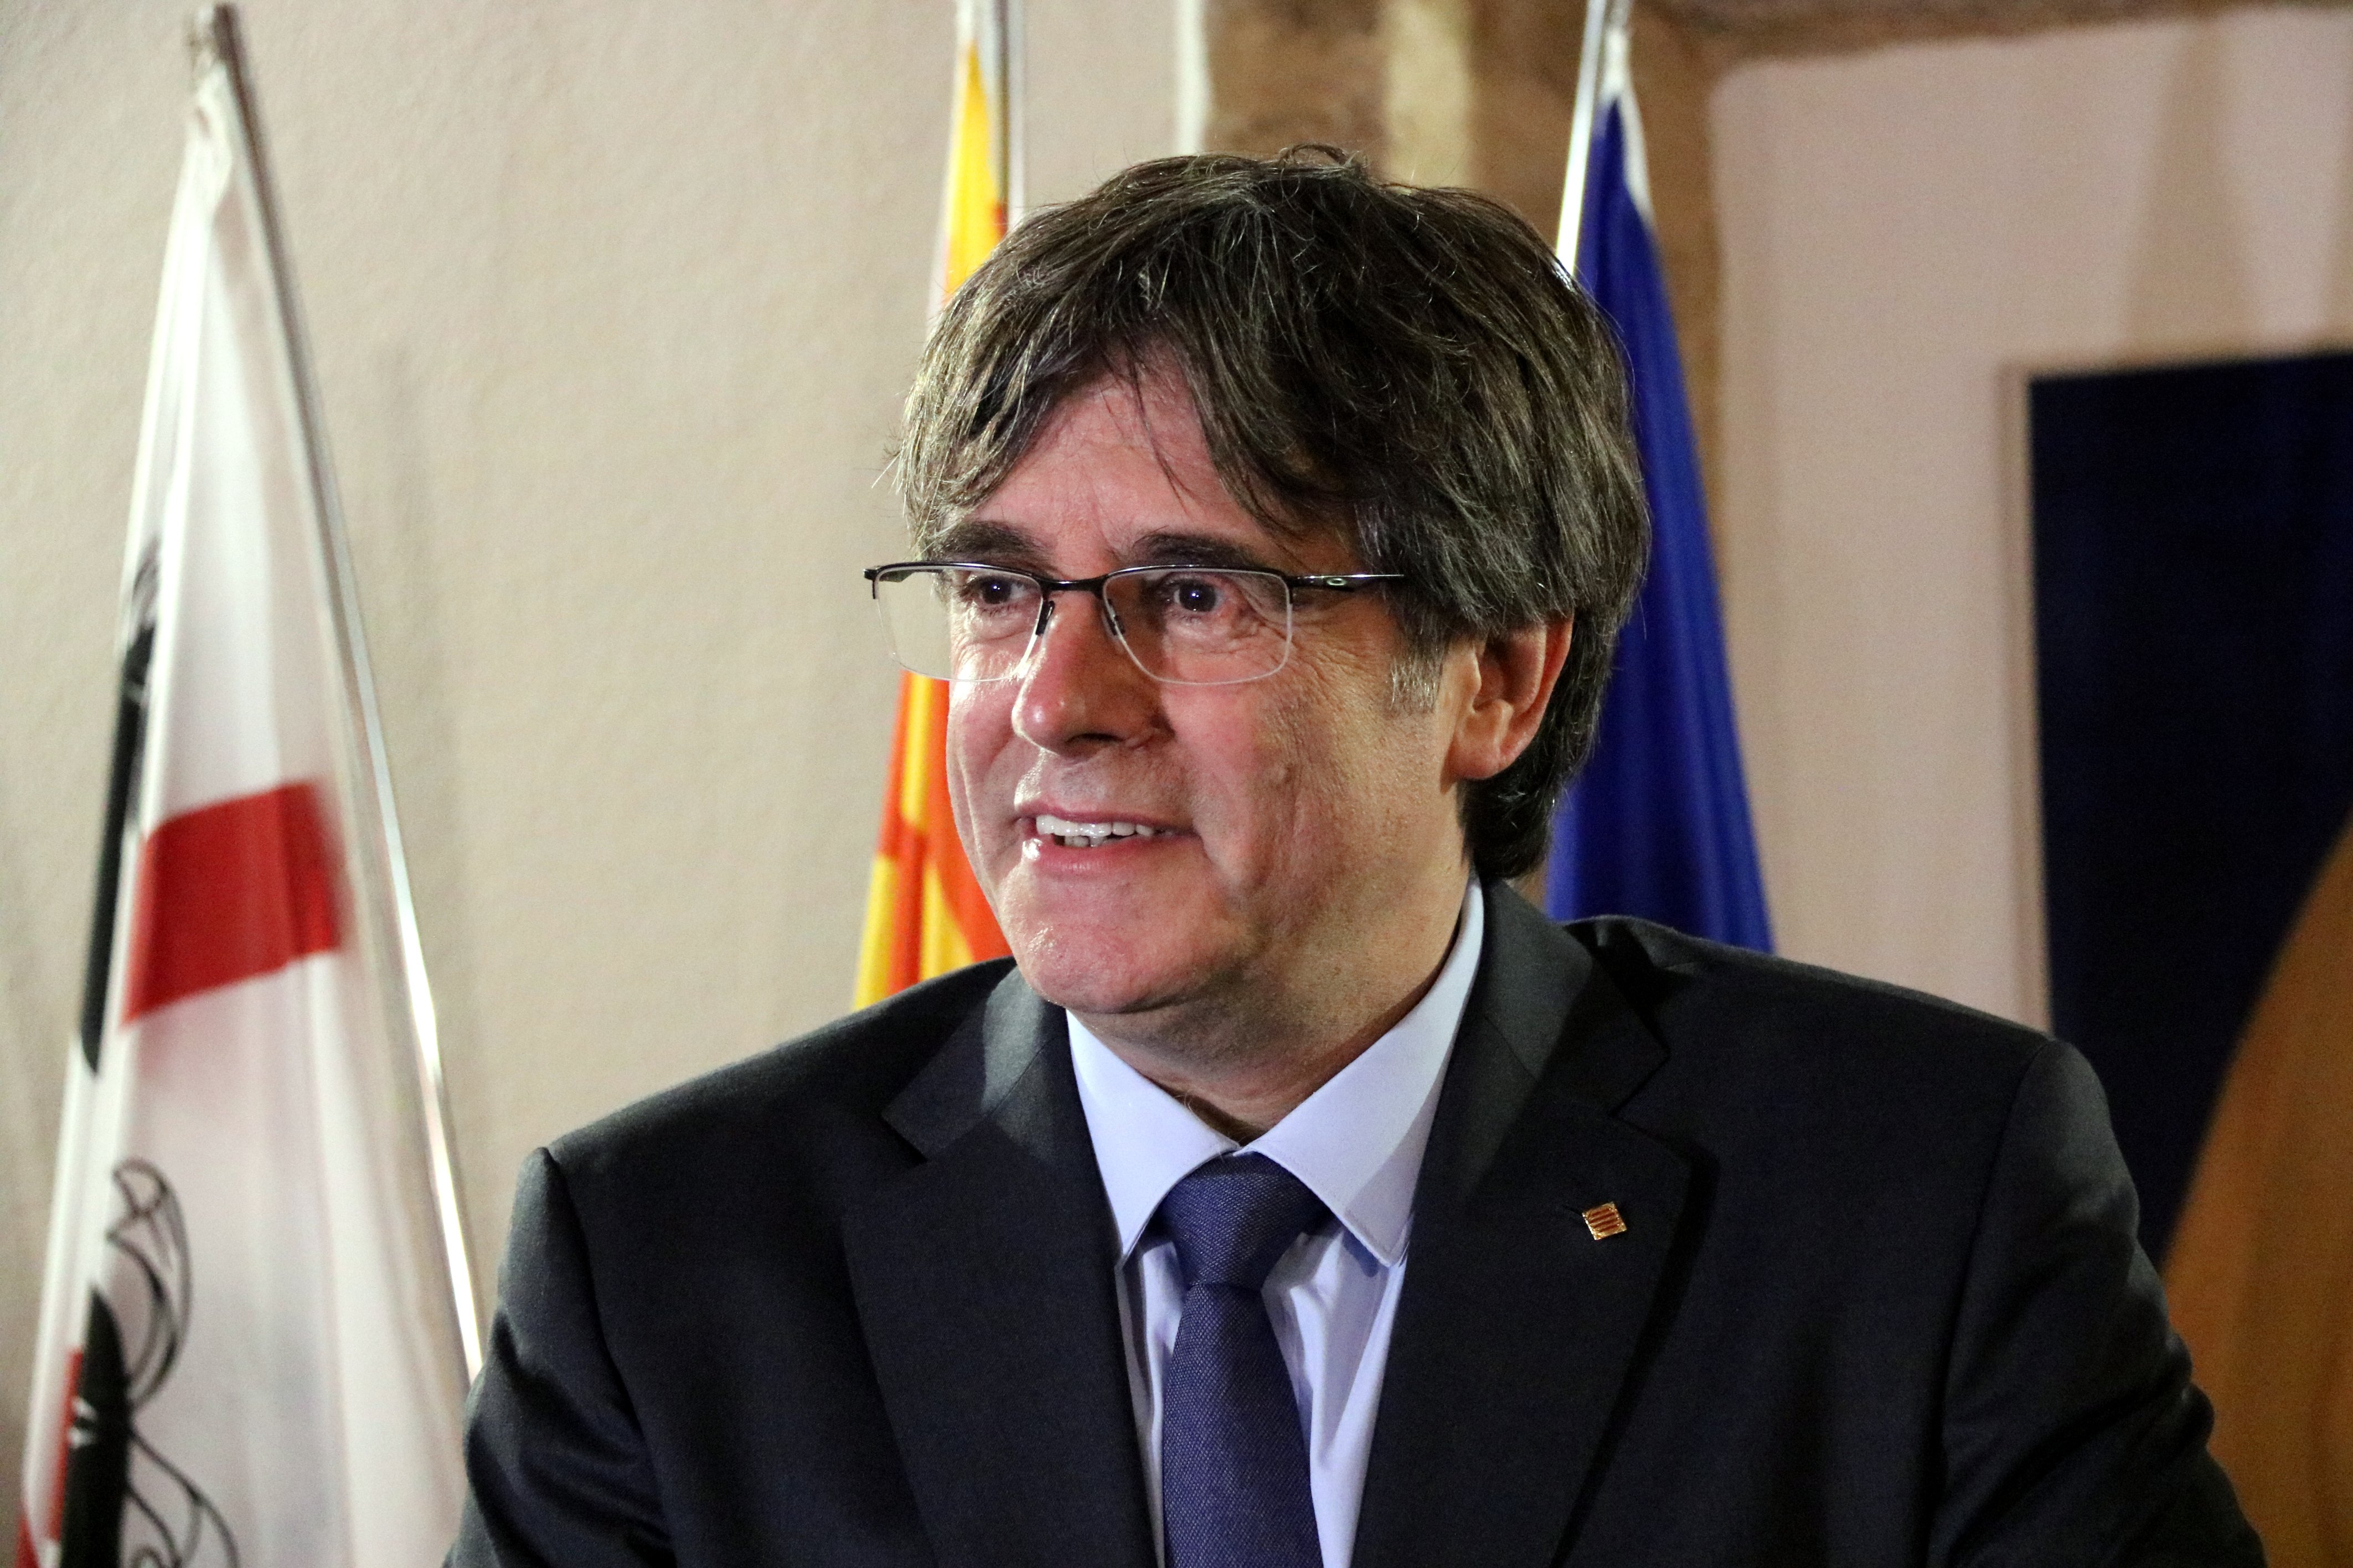 Puigdemont reclama detener a los responsables del CatalanGate: "Saben quiénes son"